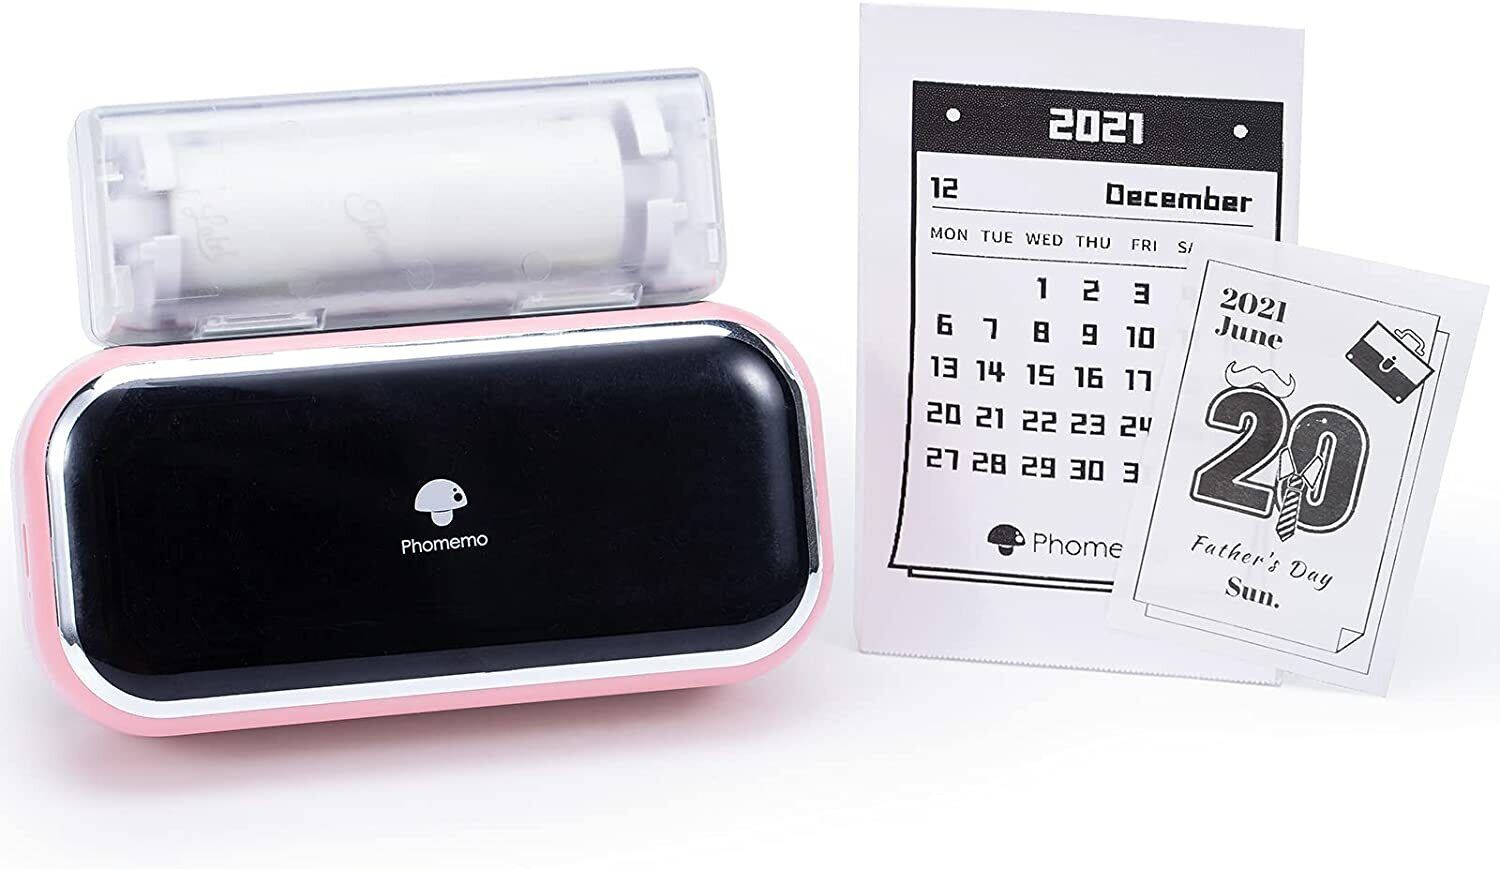 Phomemo M03 Portable Bluetooth Mobile Thermal Pocket Printer Memo Note Maker